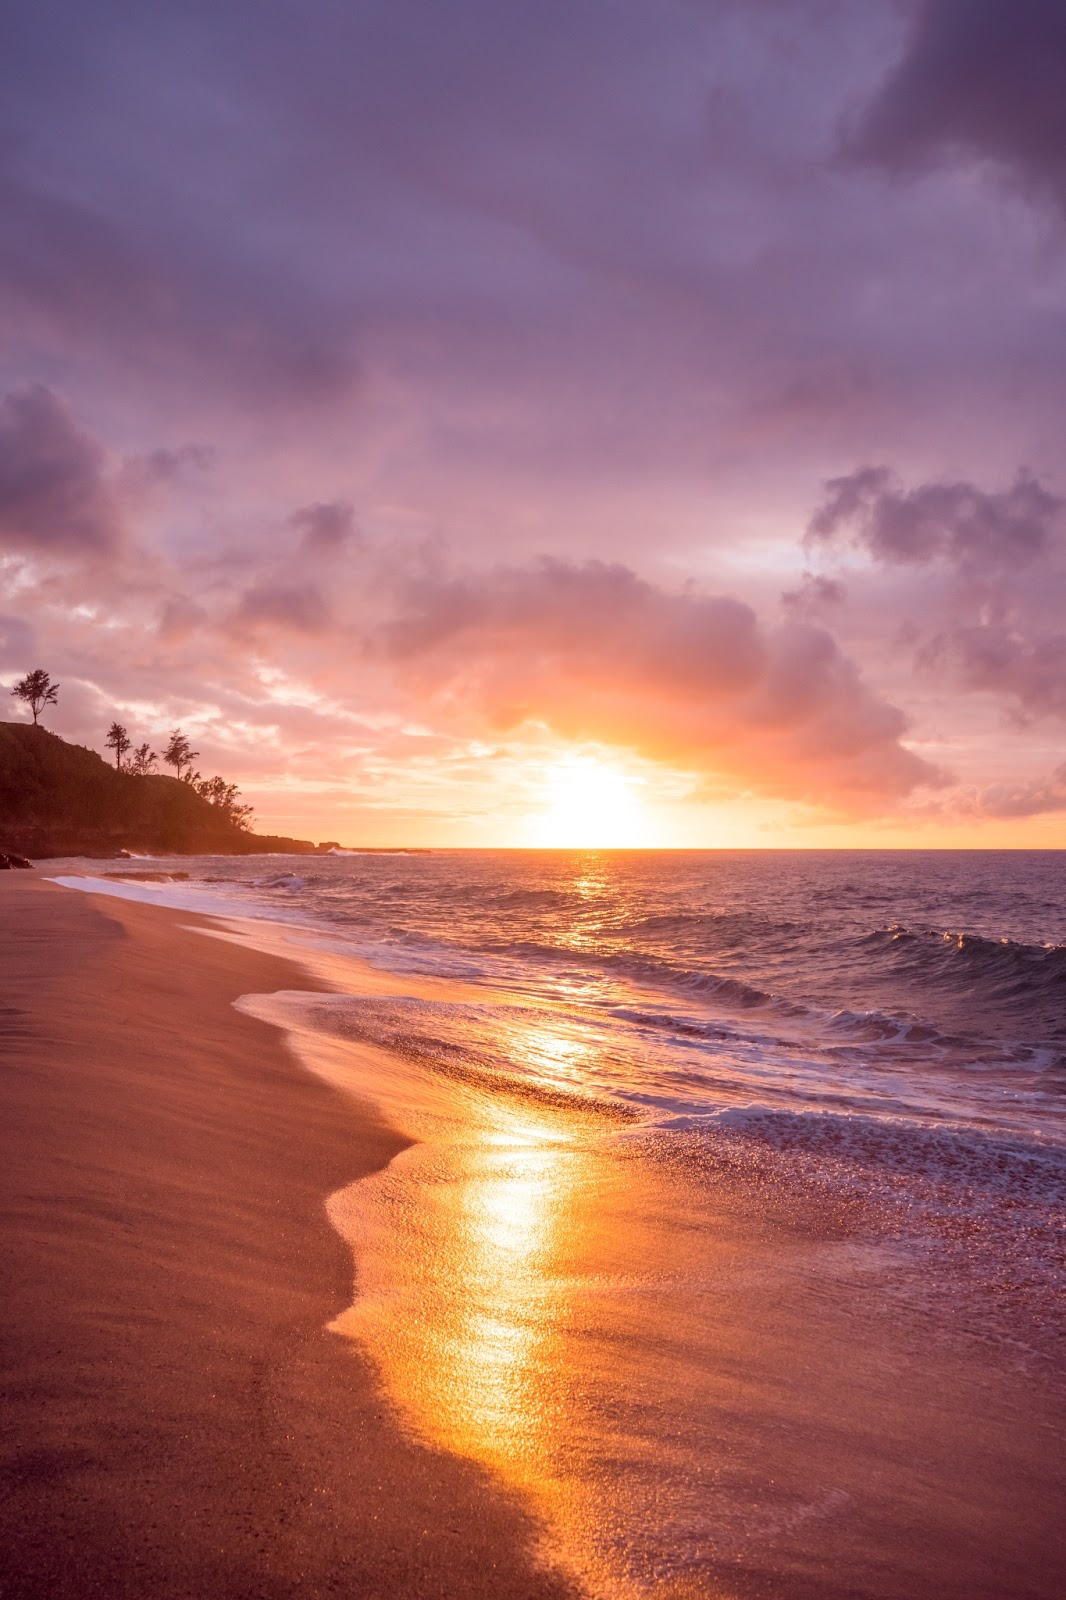 A beautiful Hawaiian beach at sunset.